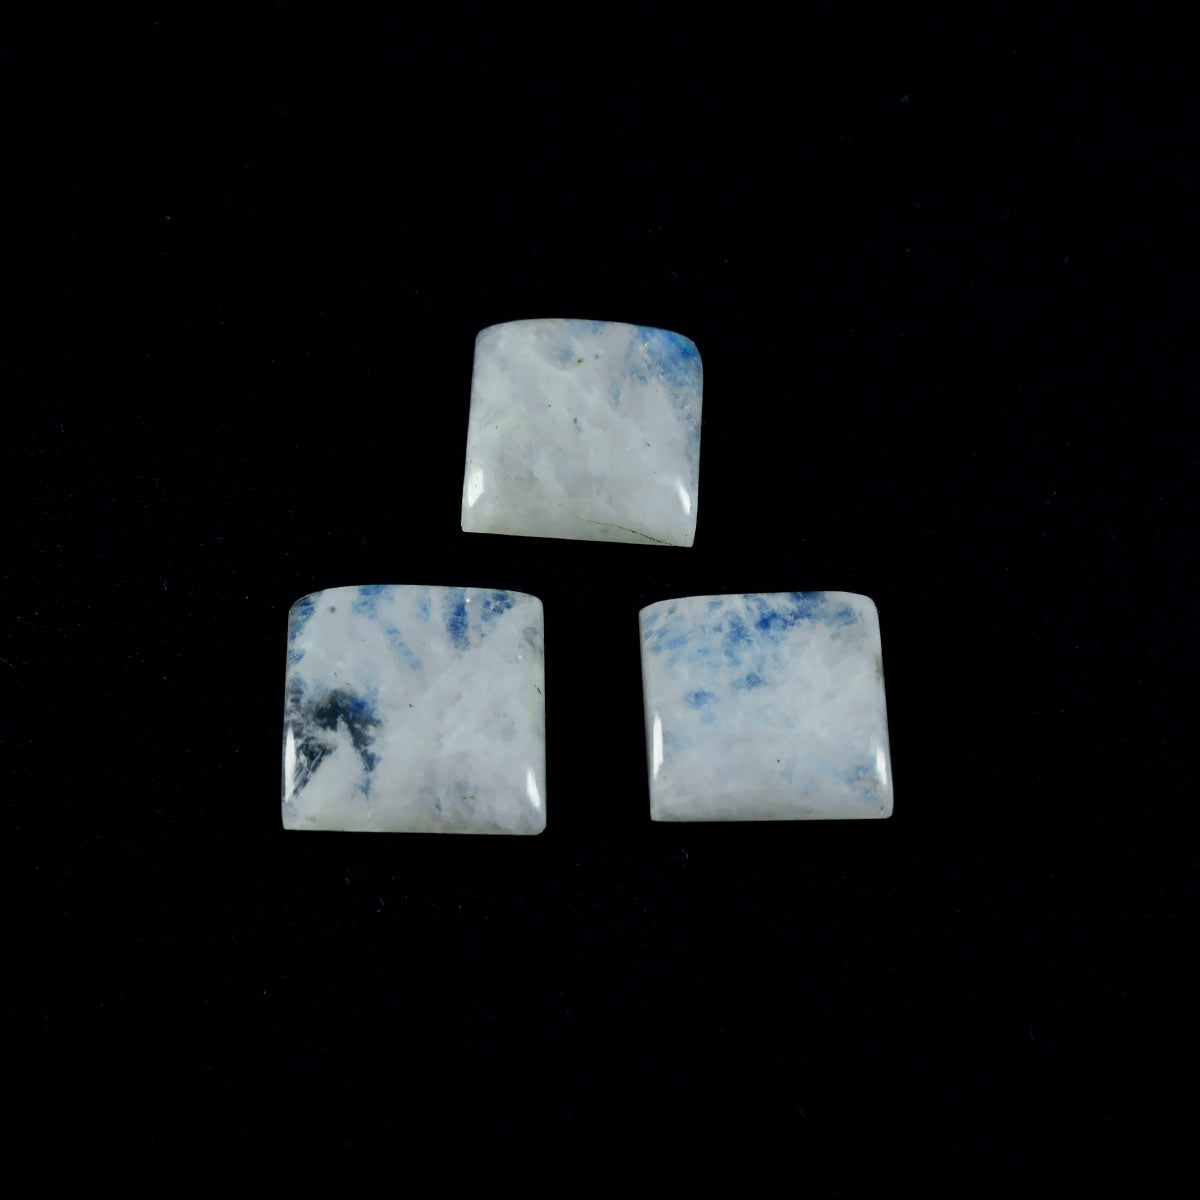 Riyogems 1PC White Rainbow Moonstone Cabochon 12x12 mm Square Shape startling Quality Gemstone